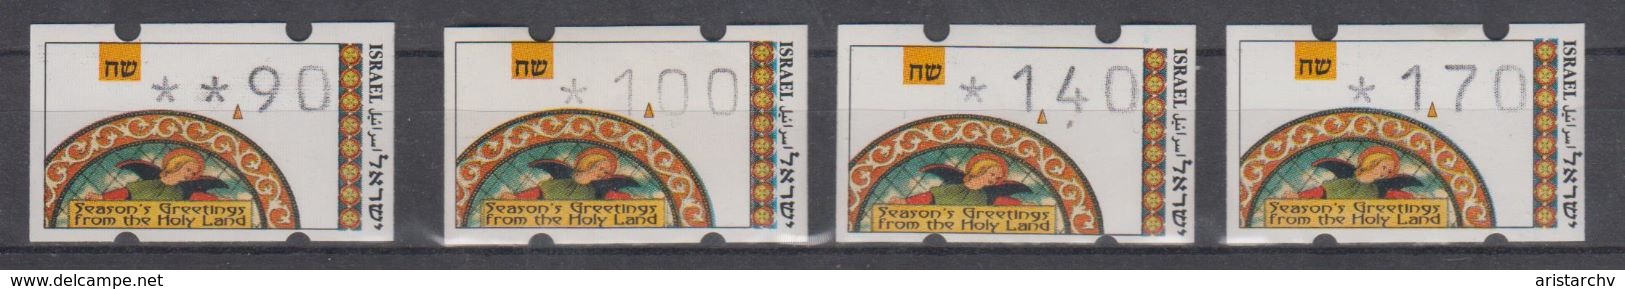 ISRAEL 1994 SIMA ATM CHRISTMAS SEASON'S GREETINGS FROM THE HOLY LAND 0.90 1 1.40 1.70 SHEKELS - Viñetas De Franqueo (Frama)